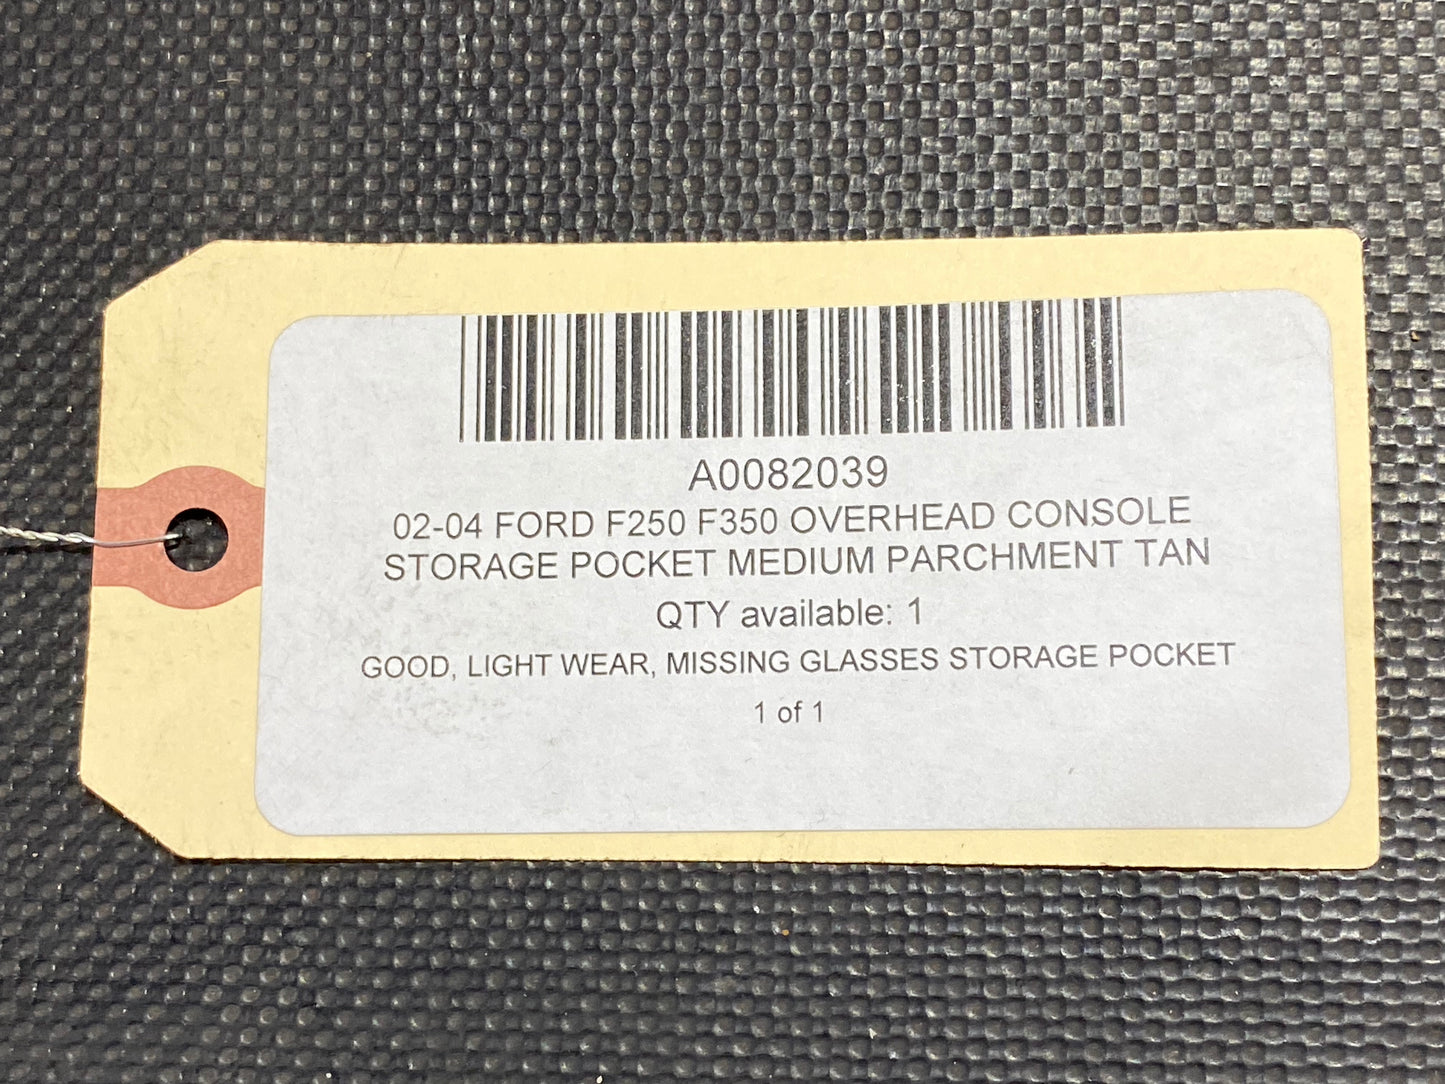 02-04 Ford F250 F350 overhead Console Storage Pocket Medium Parchment Tan